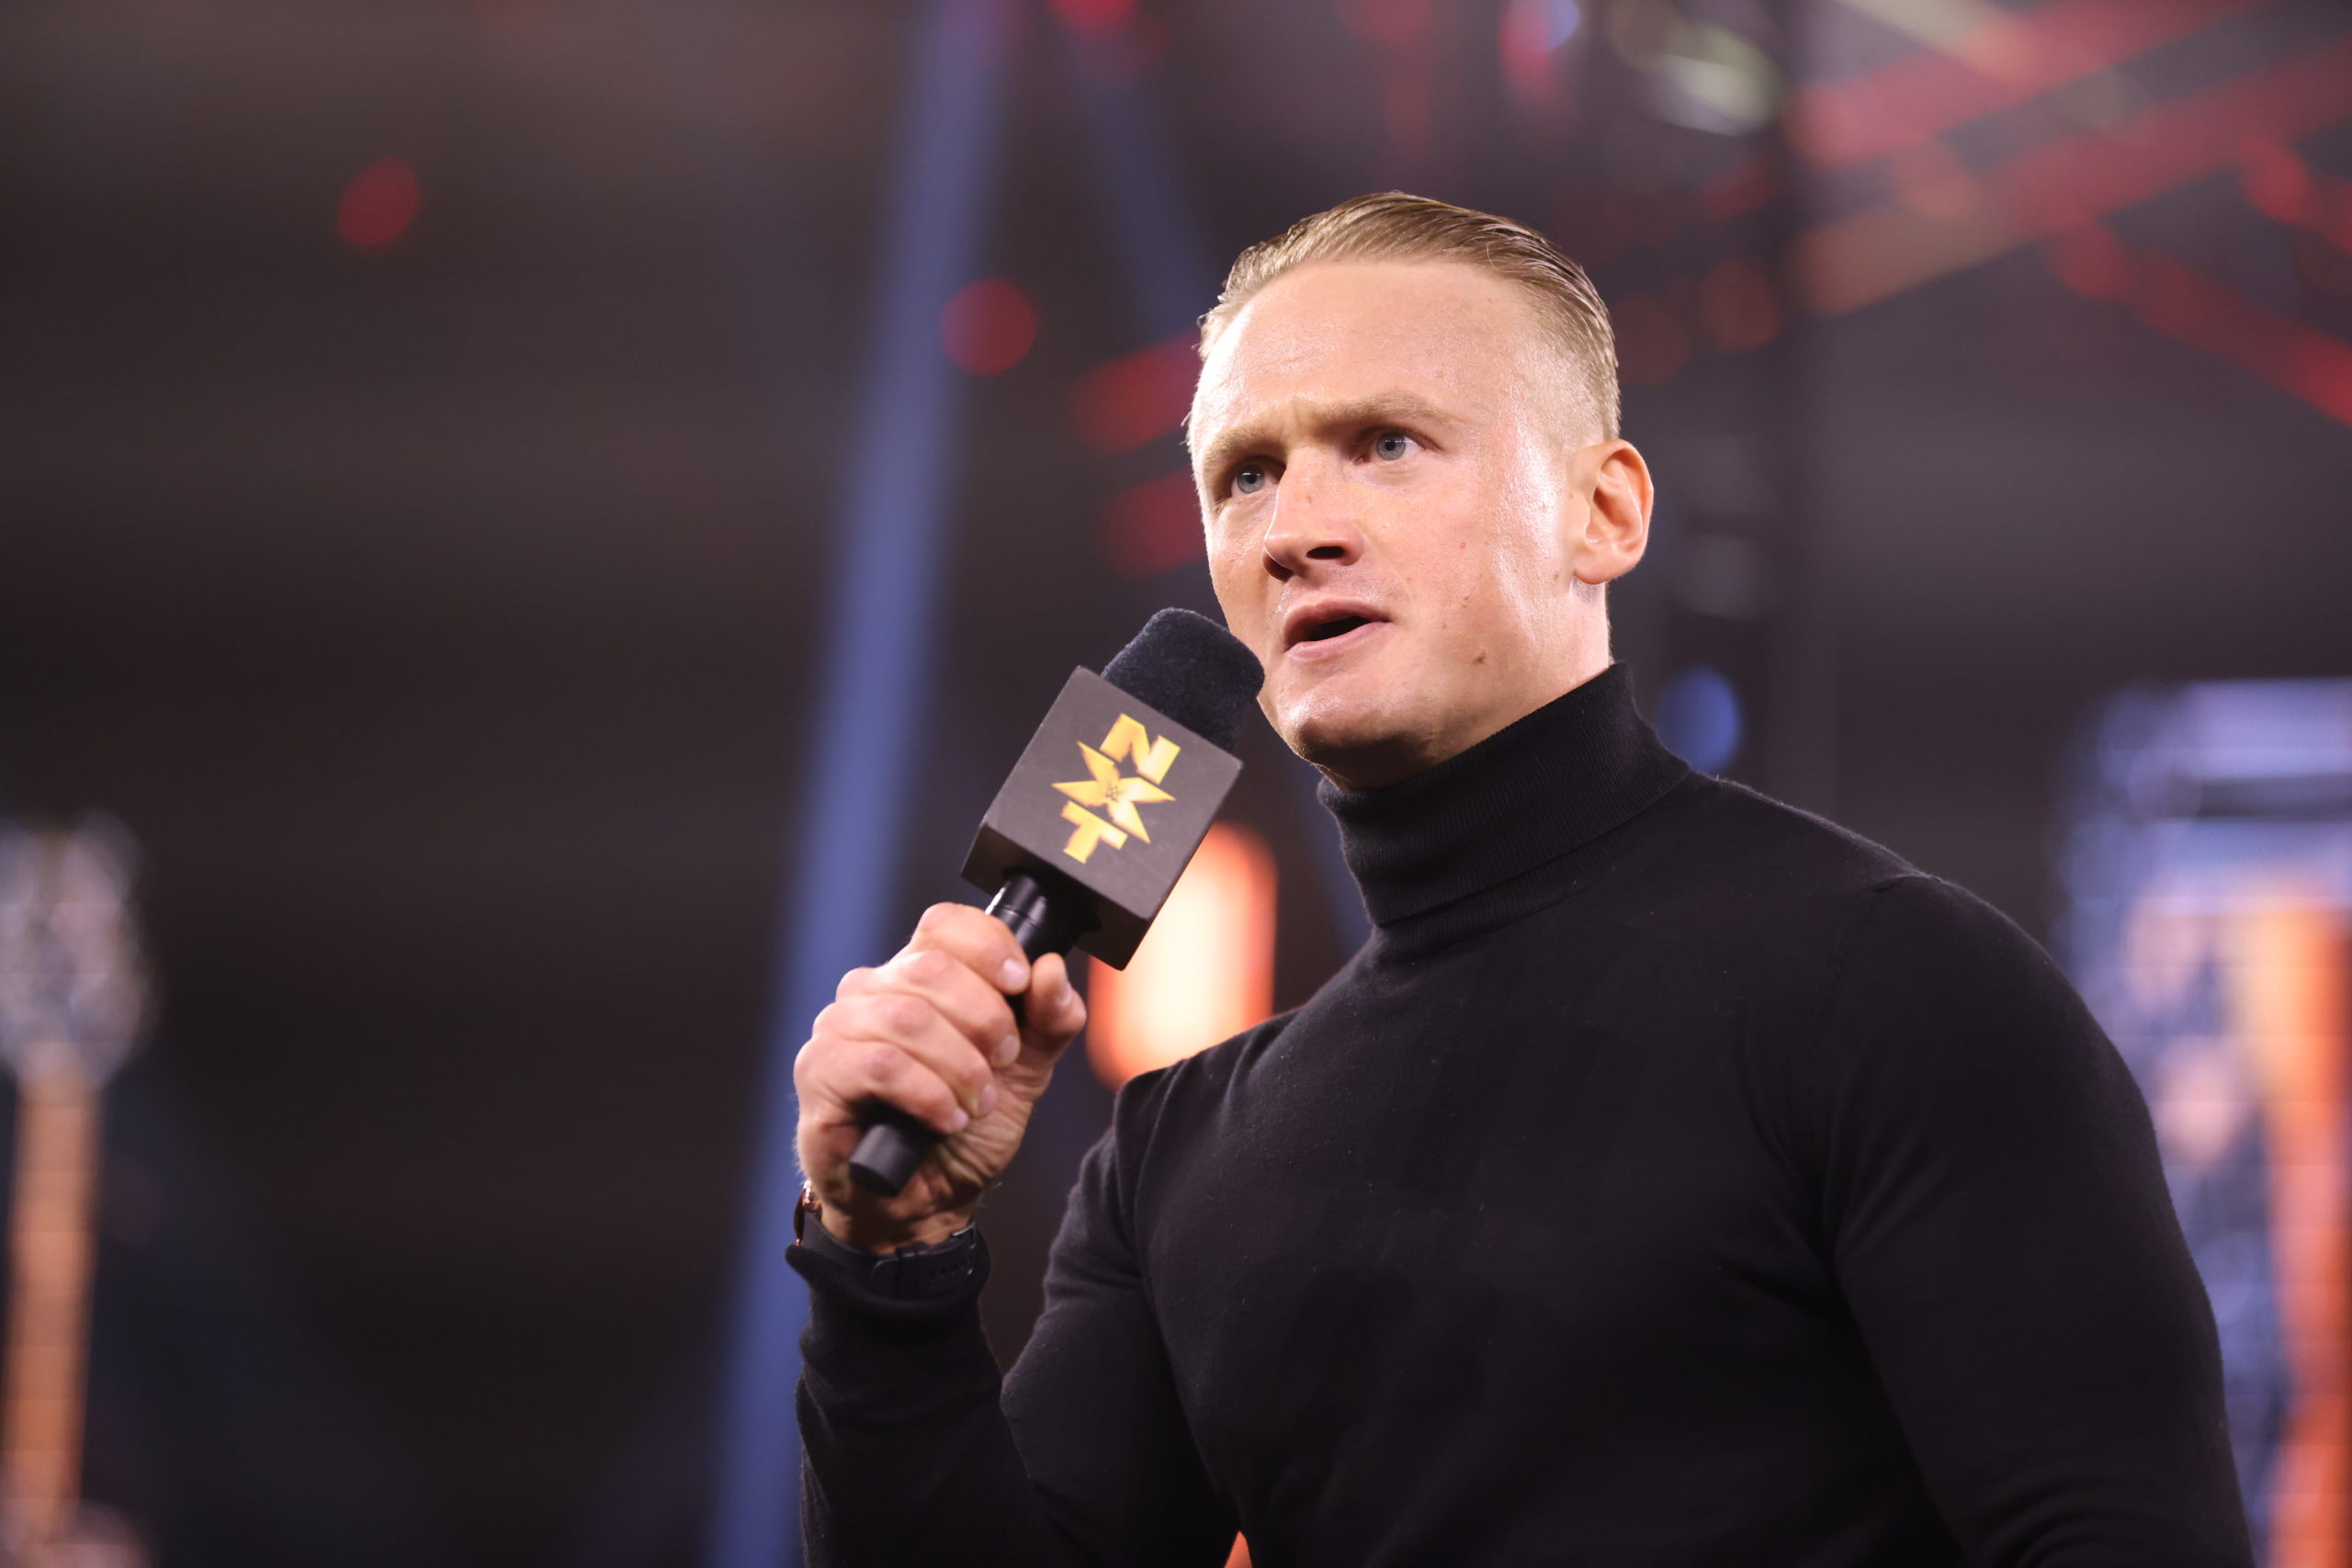 NXT UK champion Ilja Dragunov